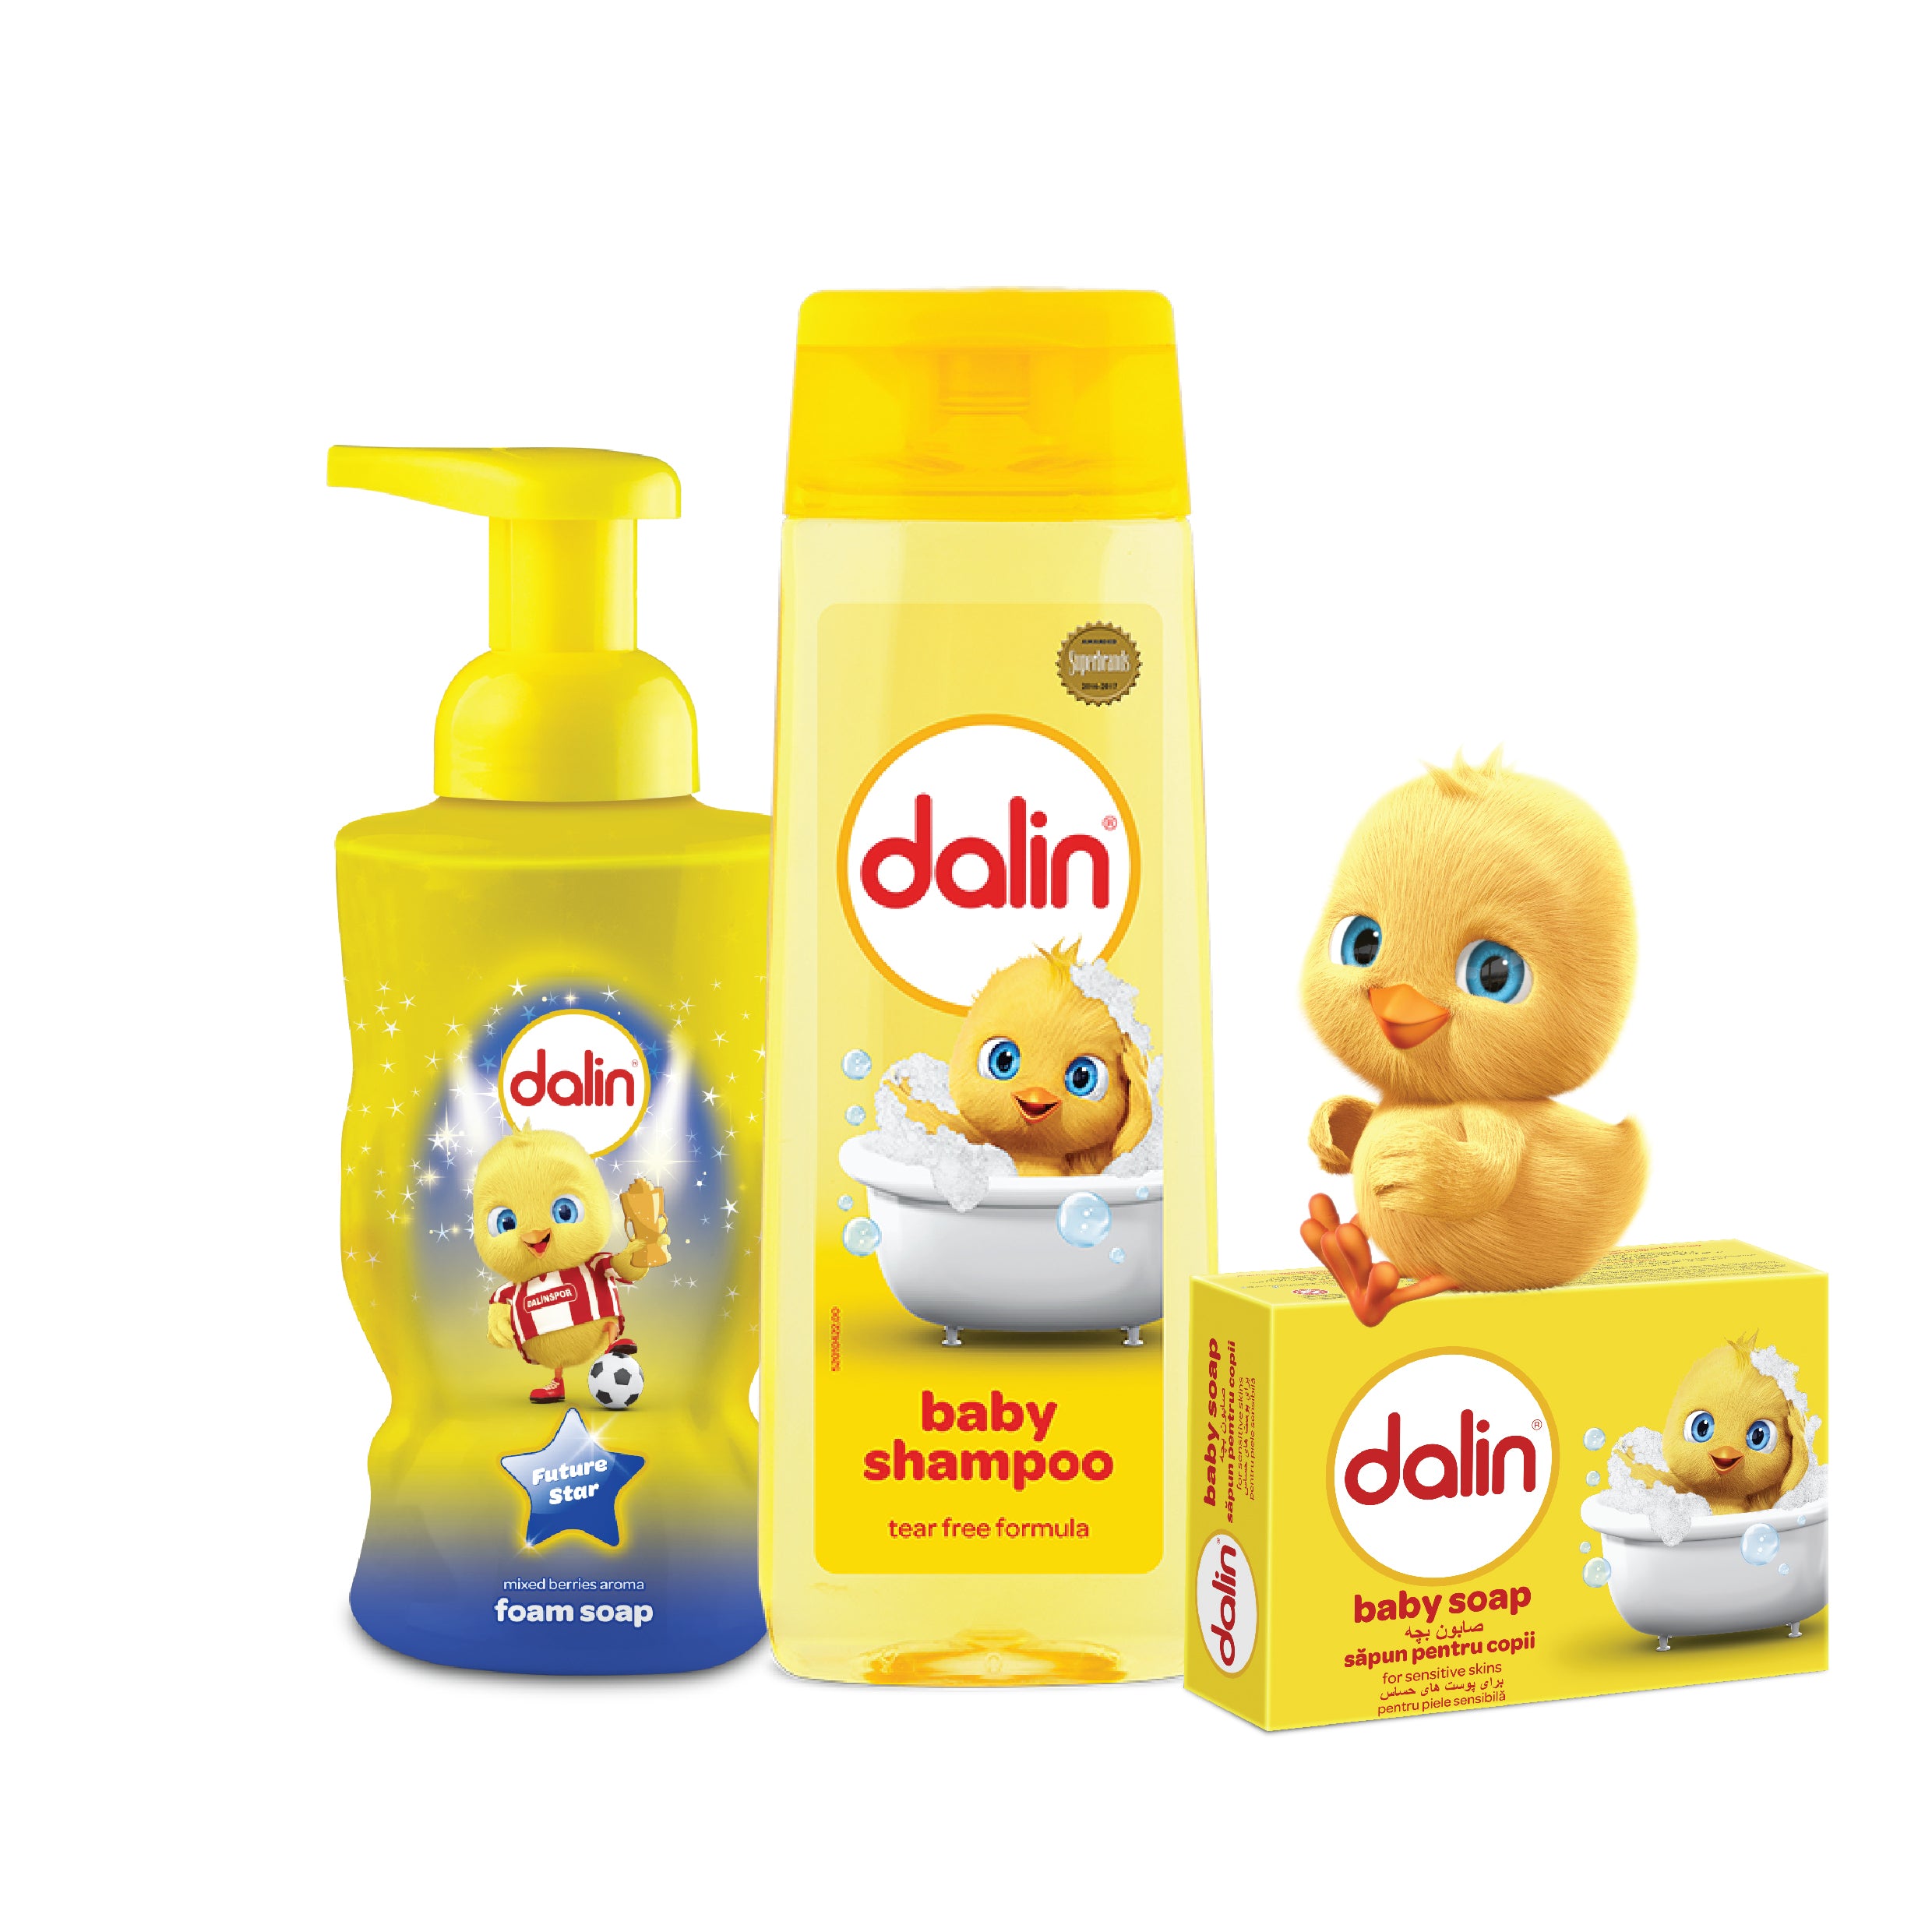 Dalin Hand Foam Soap, Mixed Berry 300ml - Dalin Baby Shampoo 200ml - Dalin Baby Soap 100g